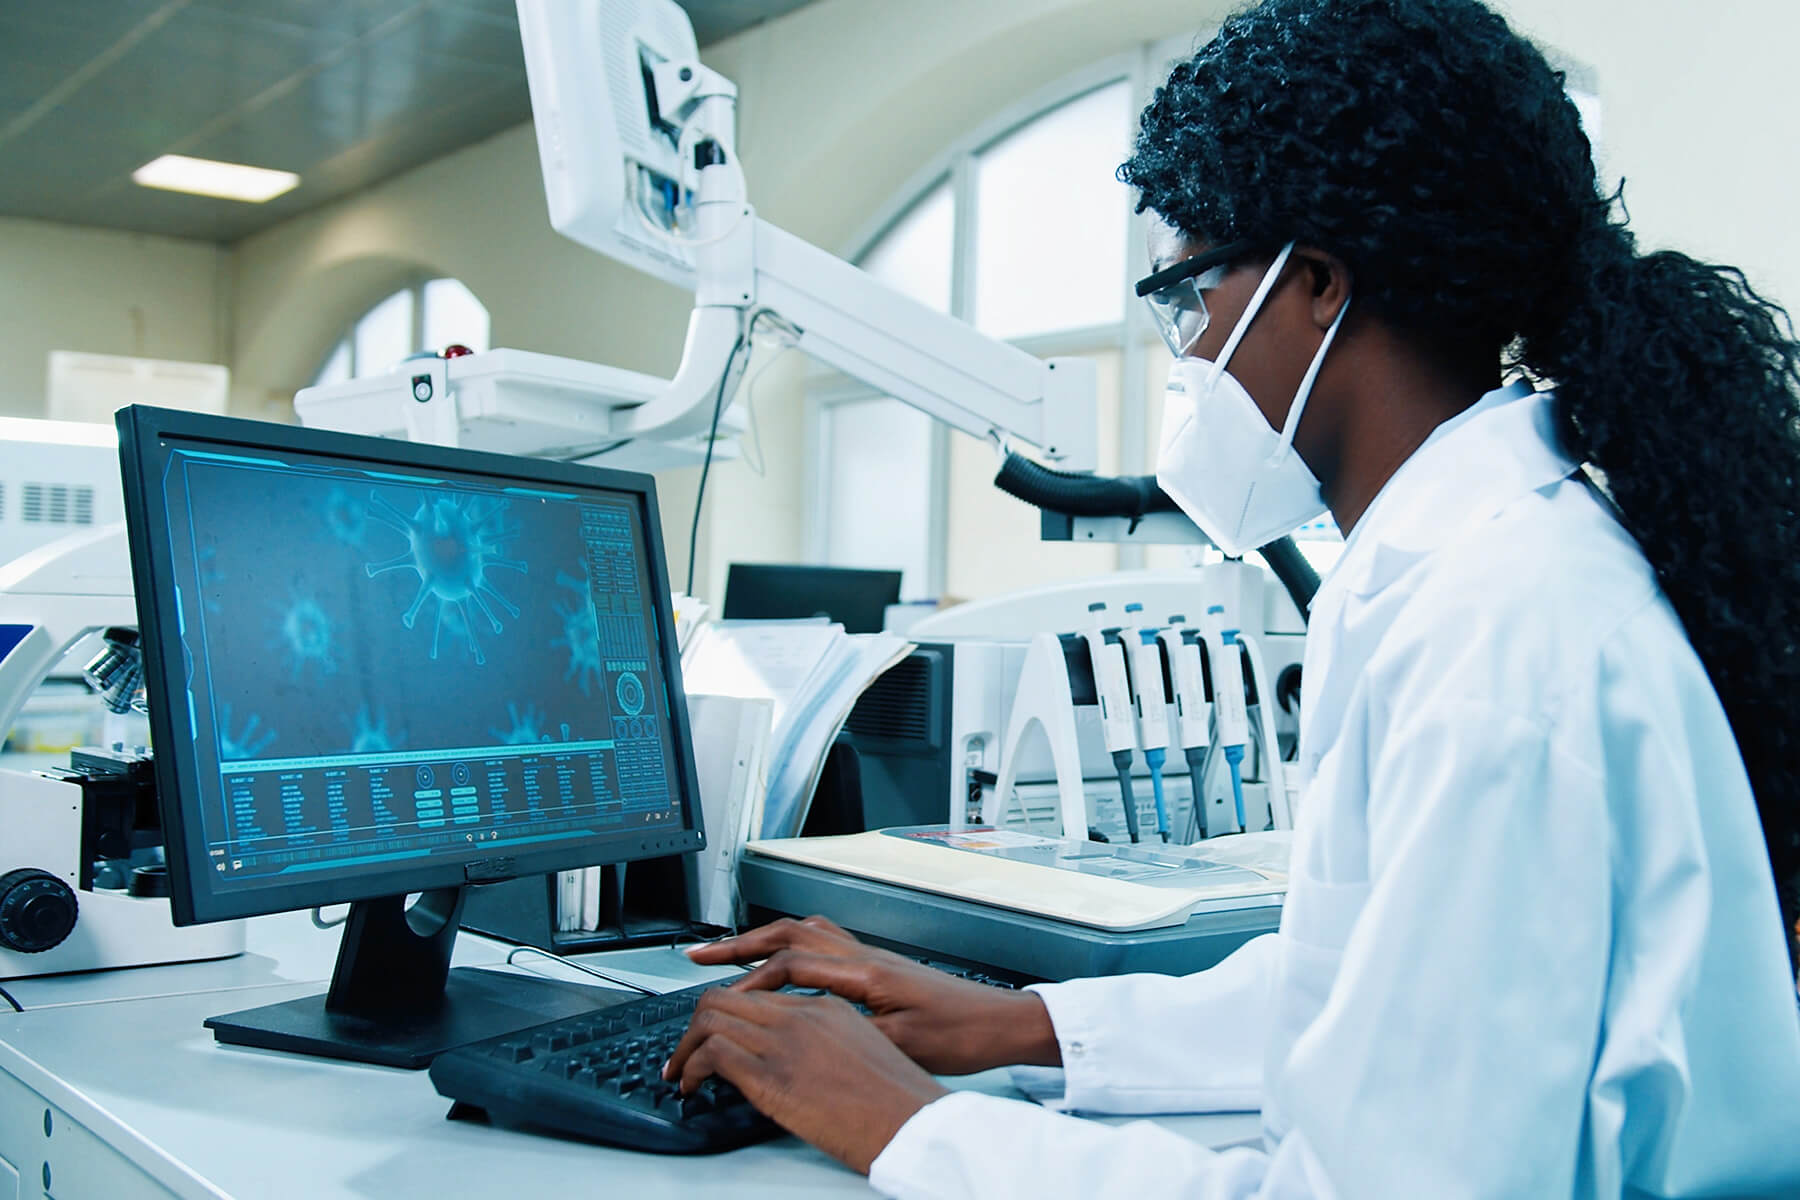 Female scientist in a lab